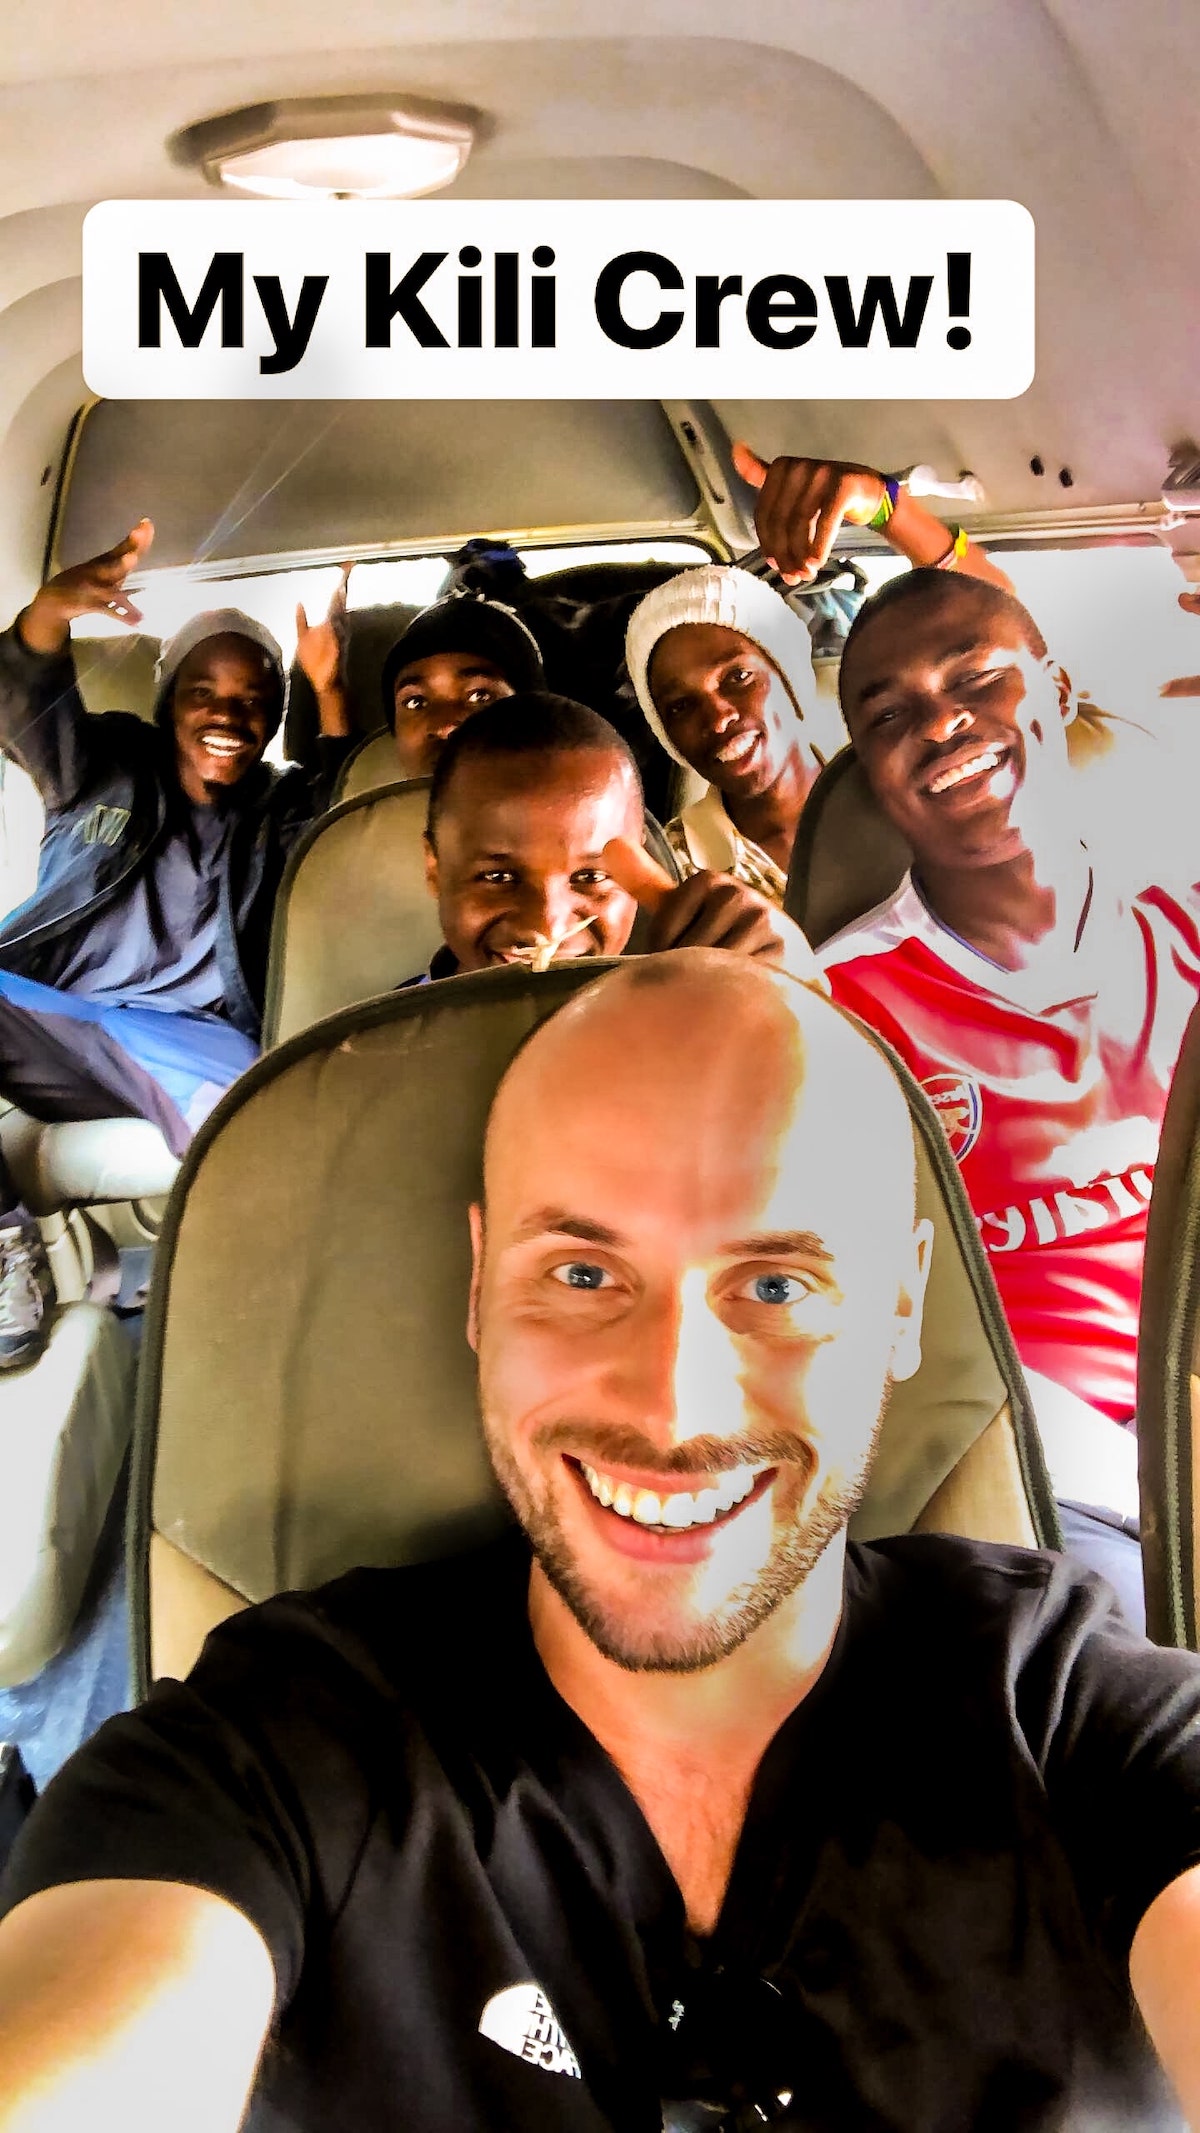 A group of men smile for a selfie photo inside a van.